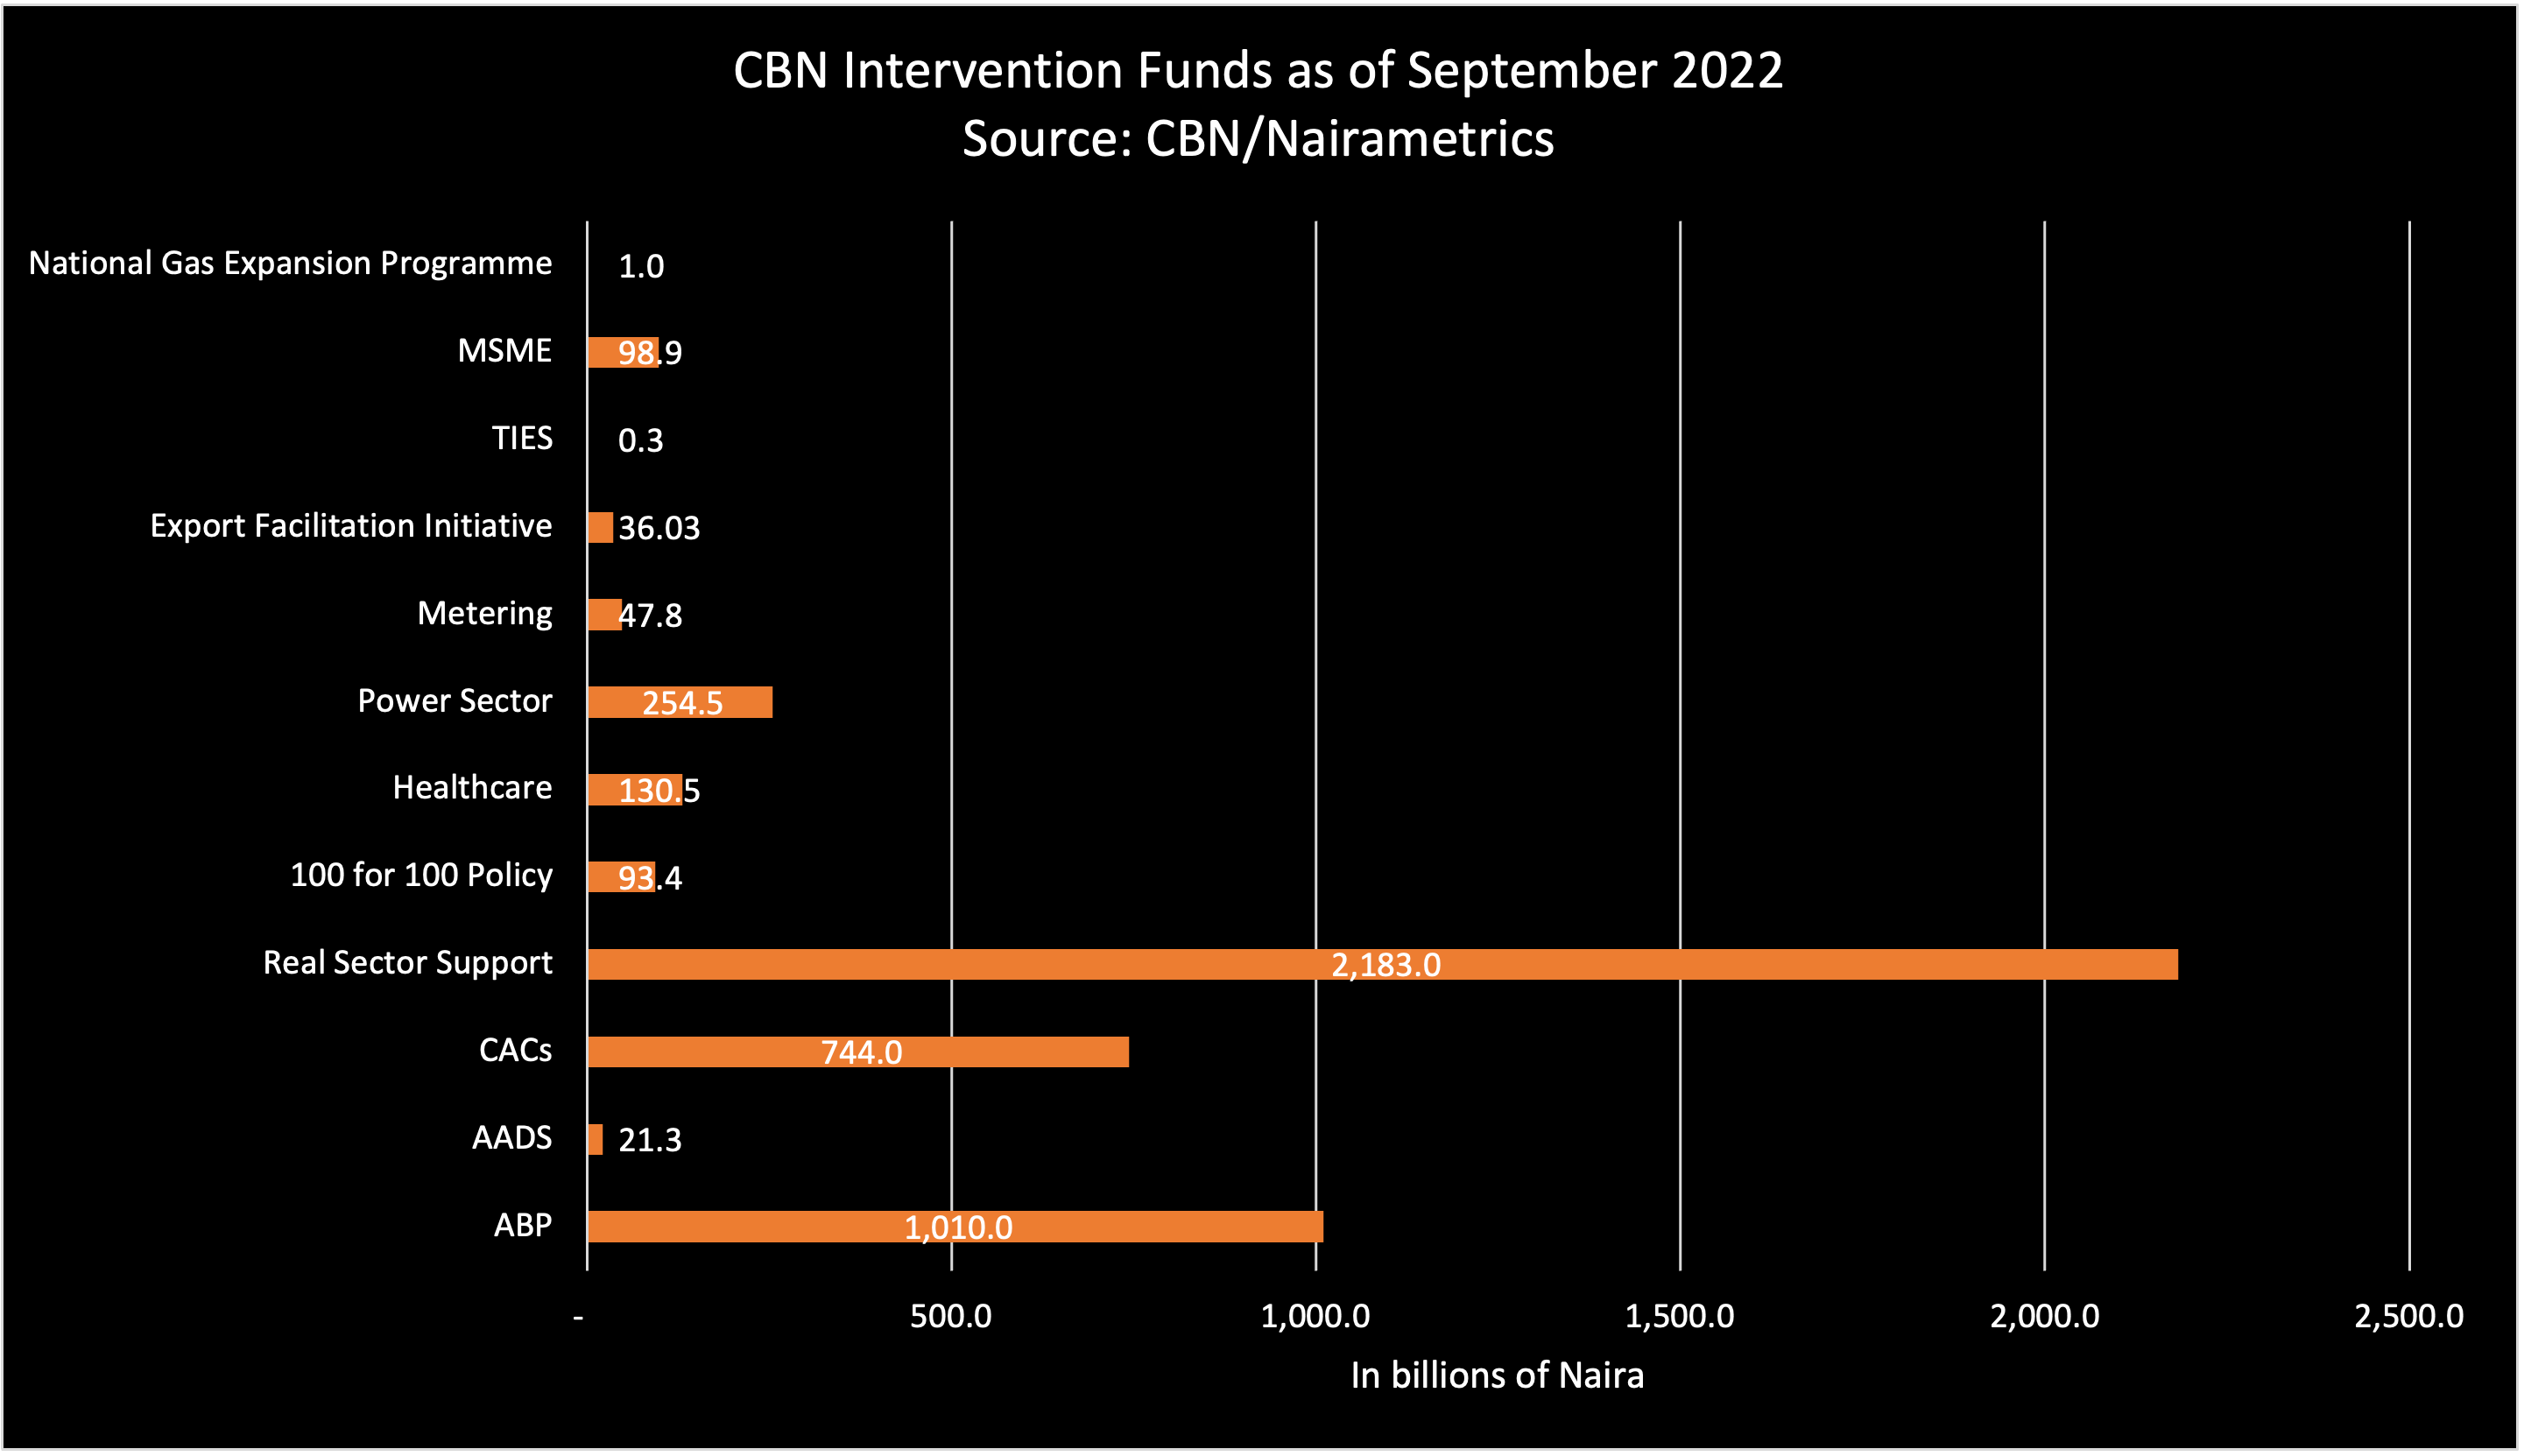 Breakdown of CBN Intervention Funds as of September 2022